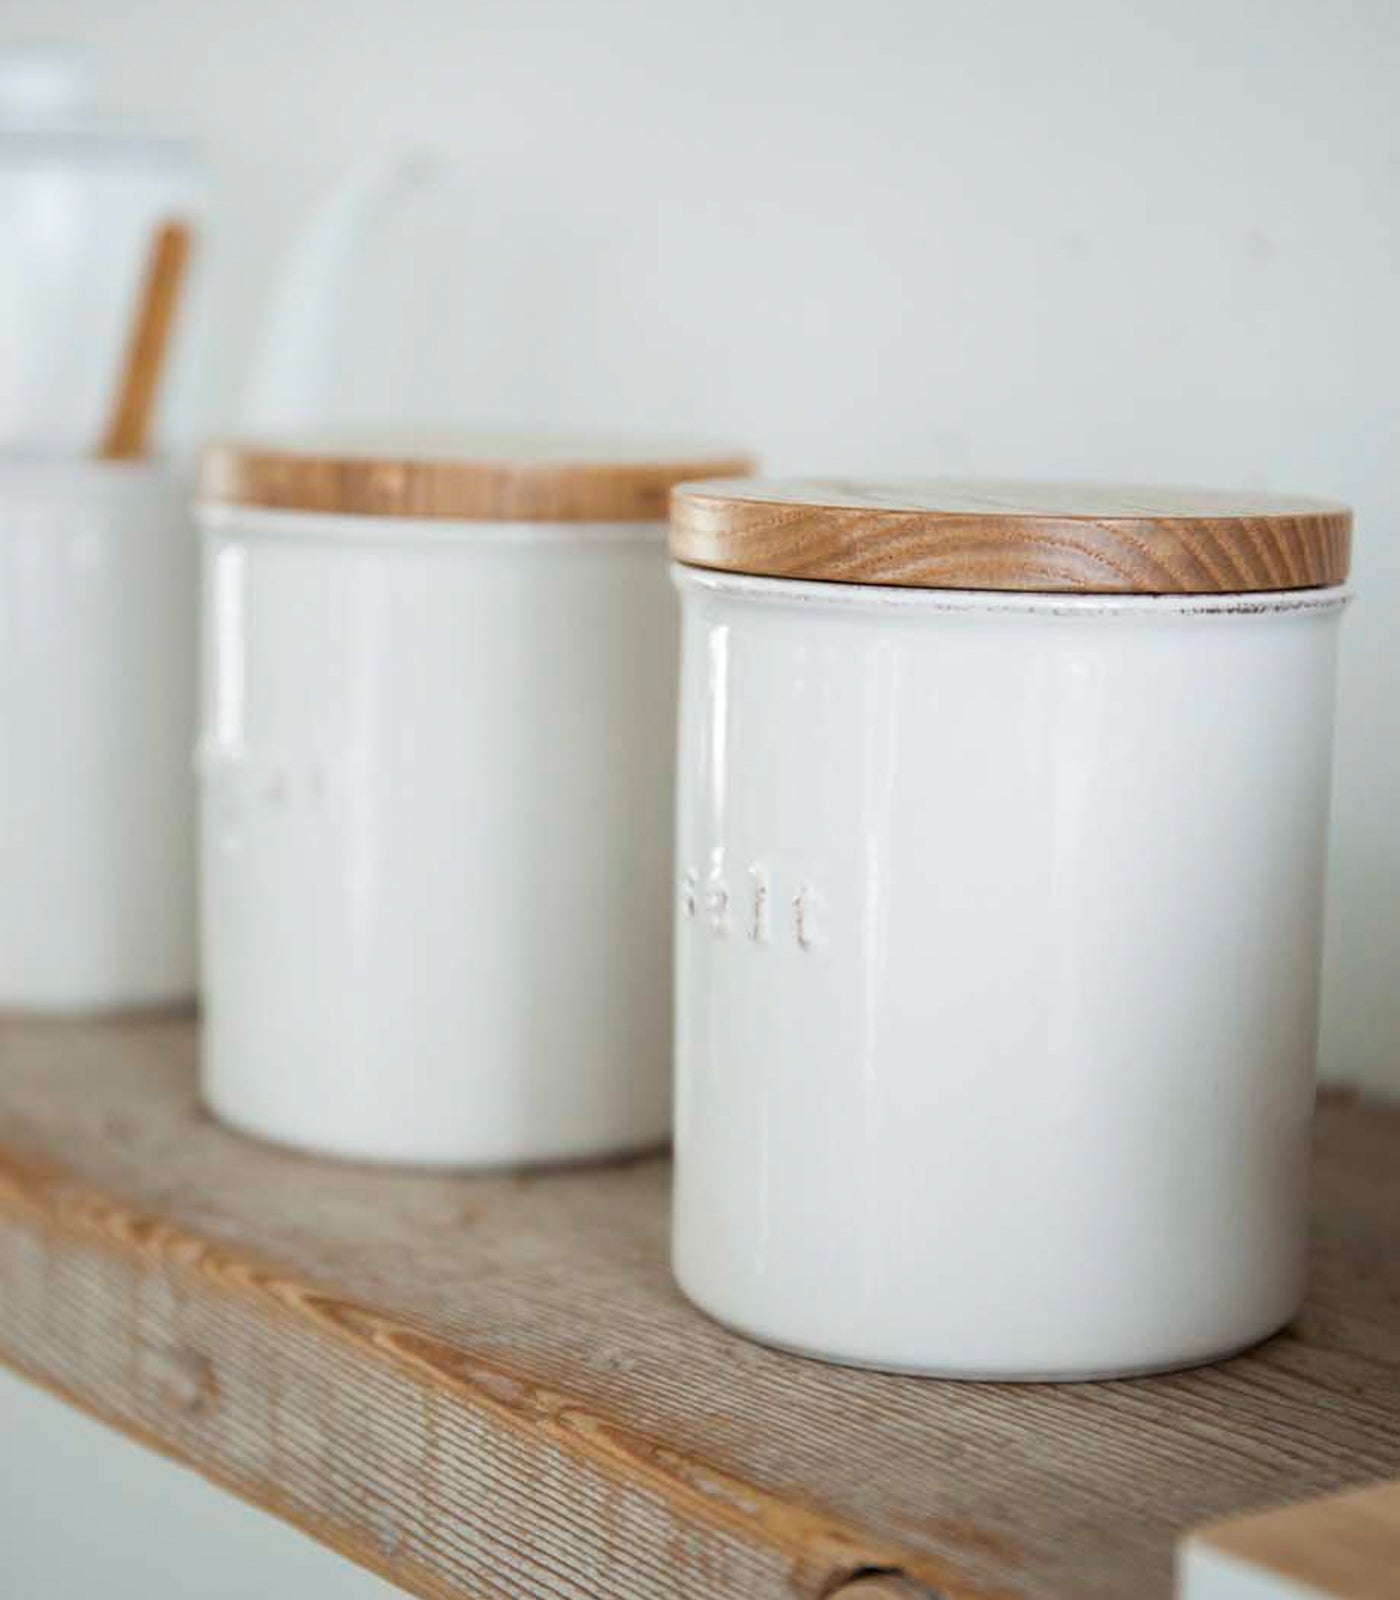 Yamazaki Home Ceramic Coffee and Sugar Canisters